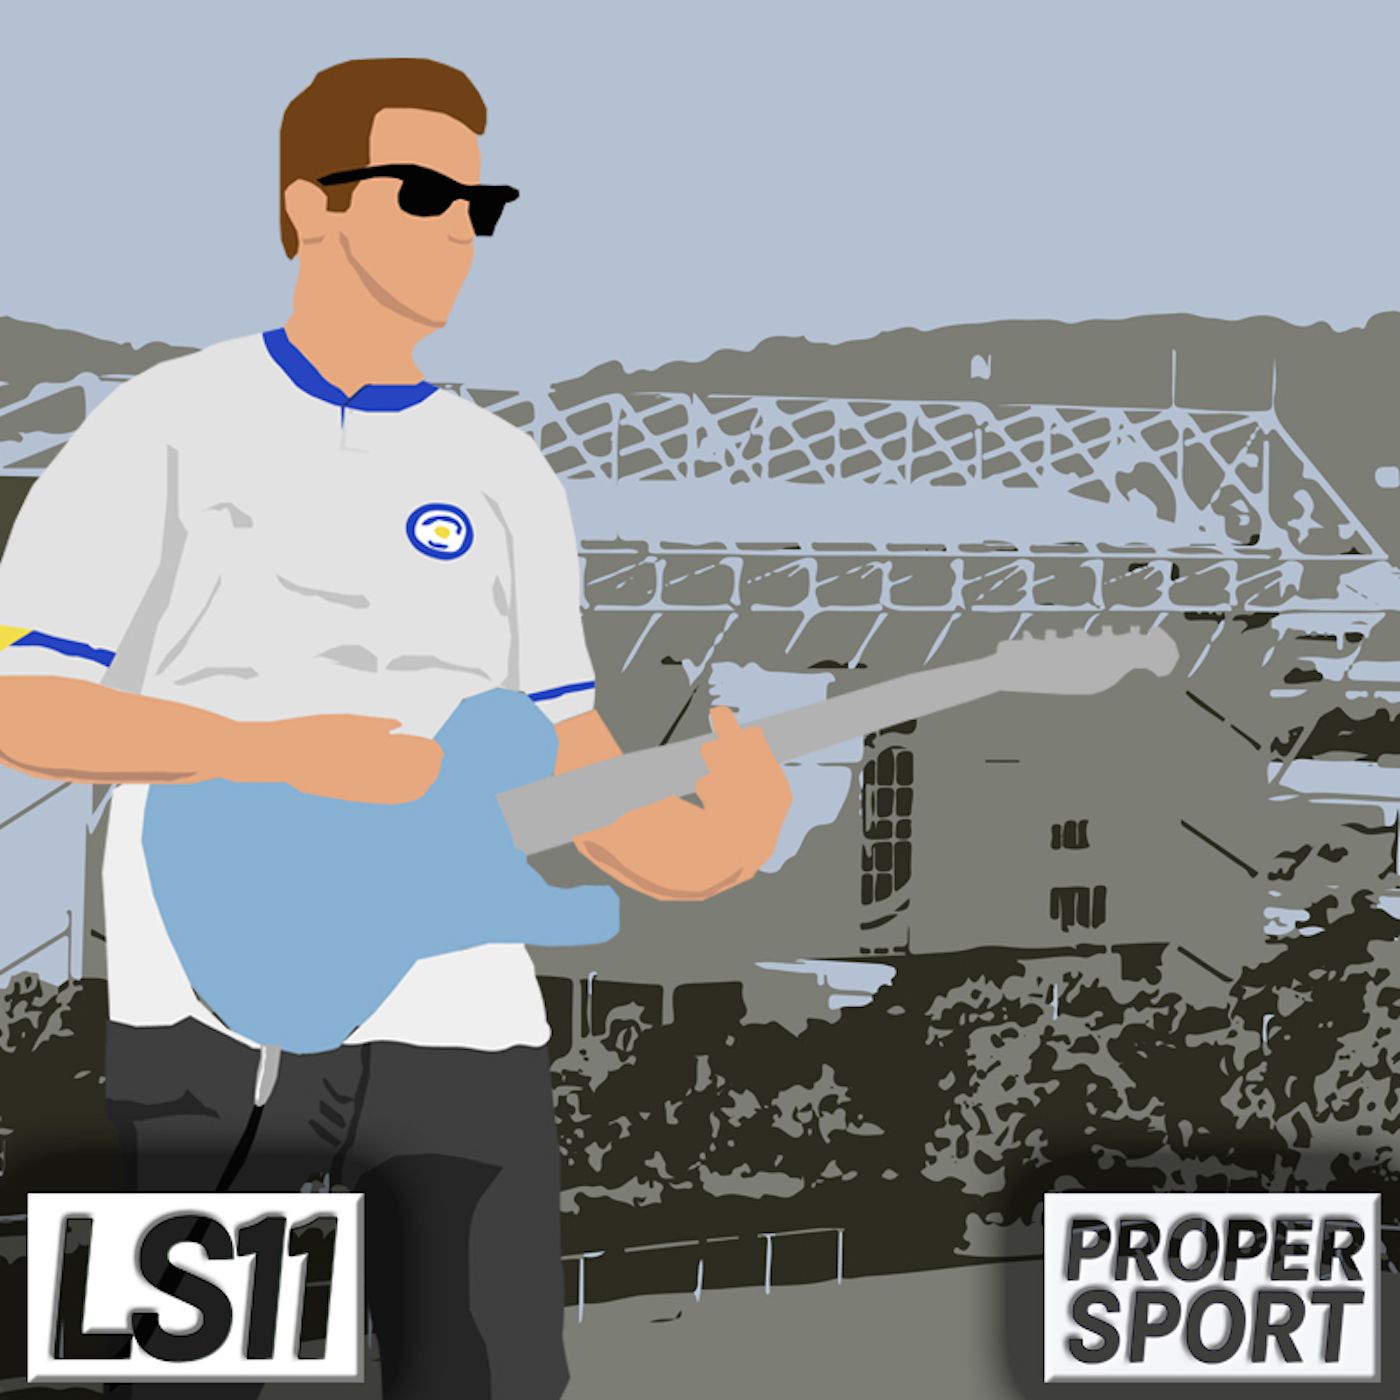 LS11 - Leeds United Podcast